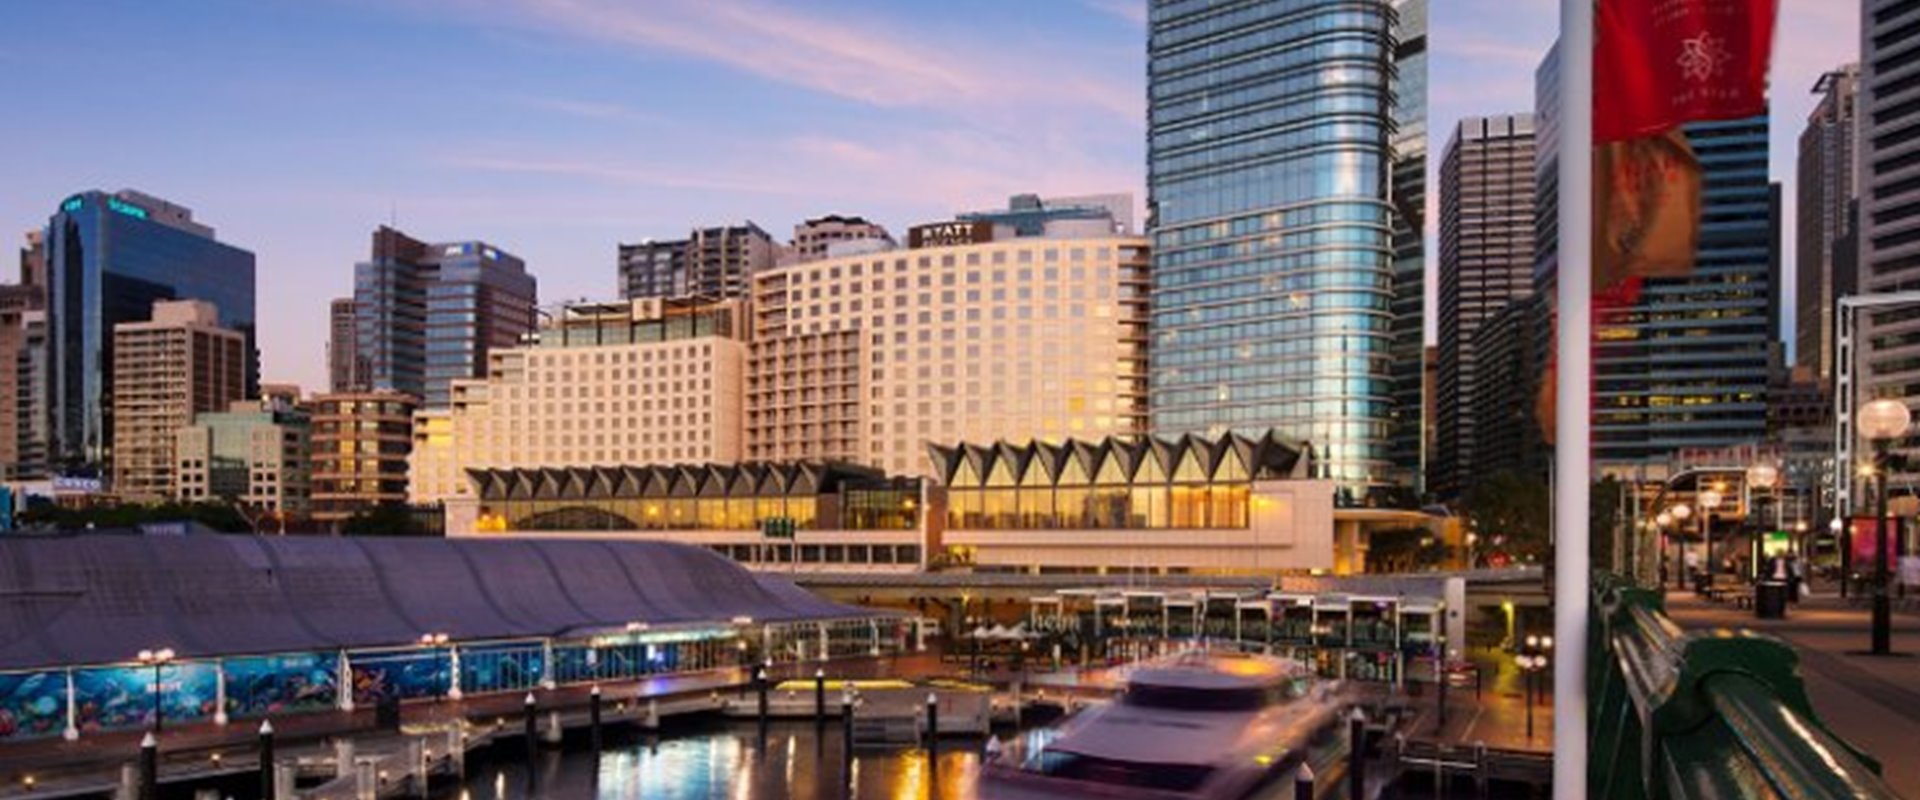 Hyatt Regency Sydney | Conference Venues Sydney | Conference Venues New South Wales